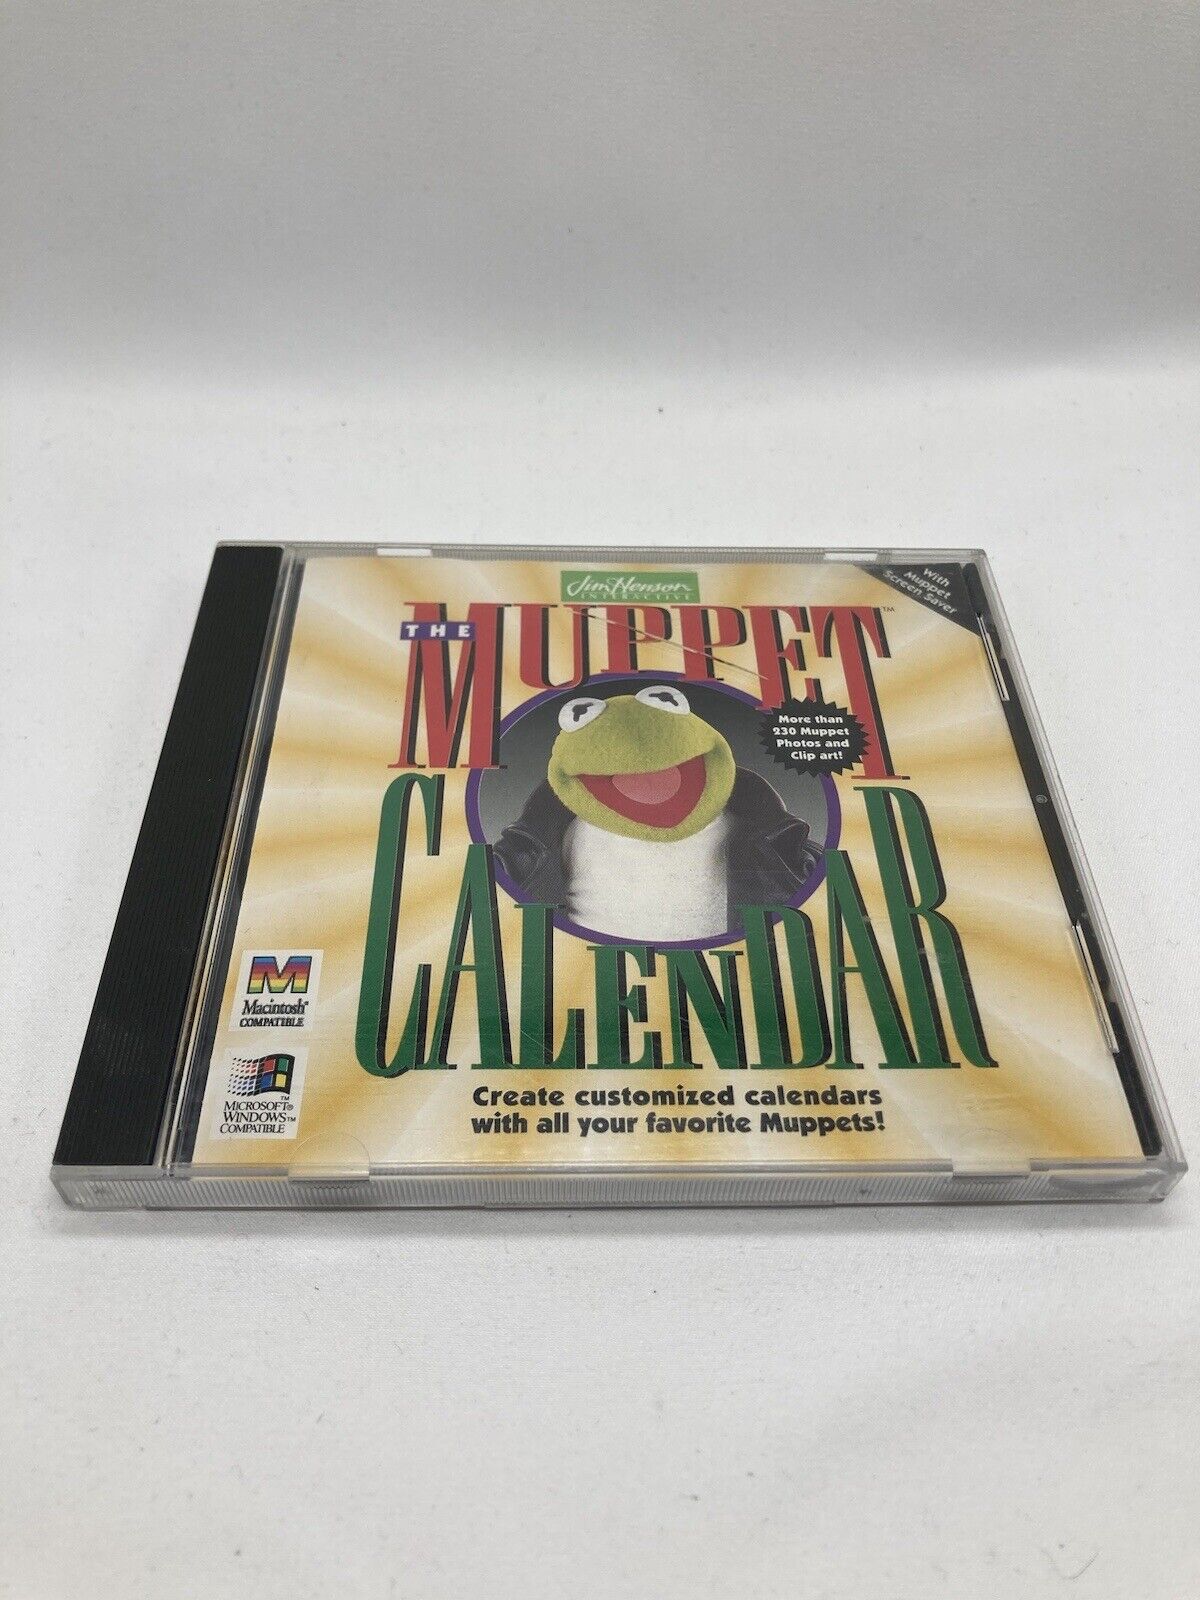 Jim Henson Interactive THE MUPPET CALENDAR PC CD-ROM 90s Clip Art Pics Kermit